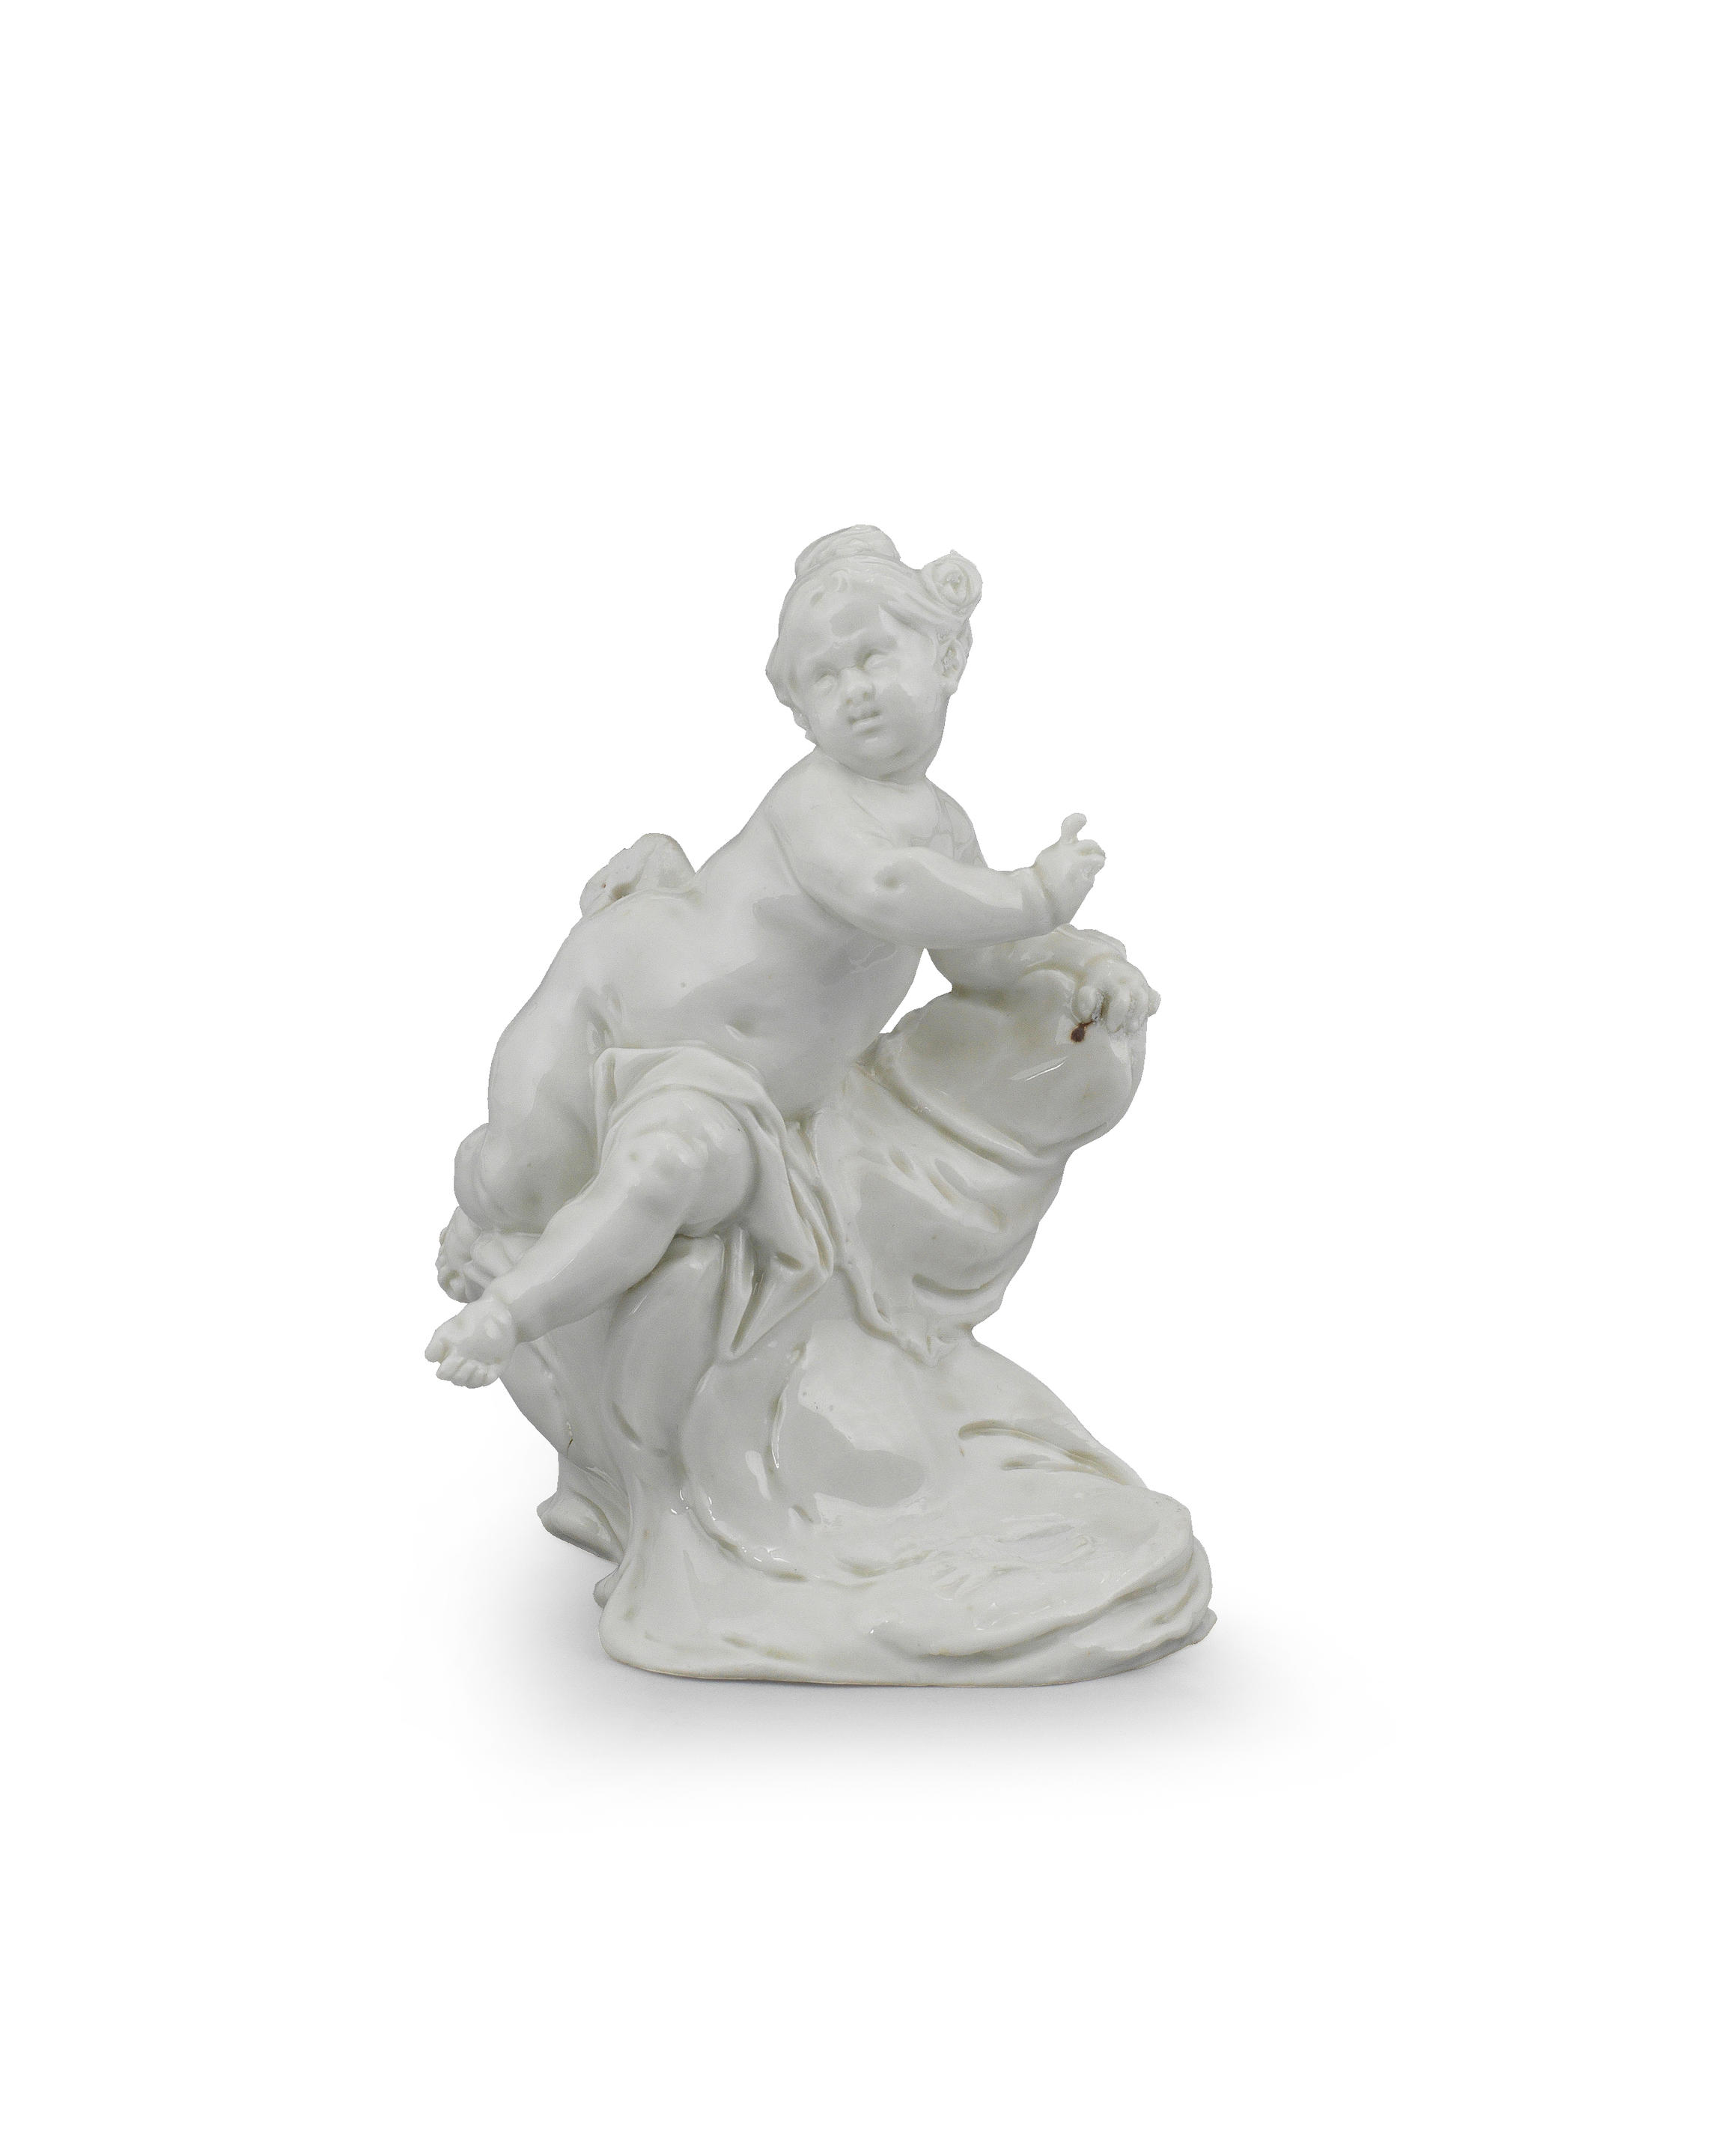 A Nymphenburg white figure of Juno